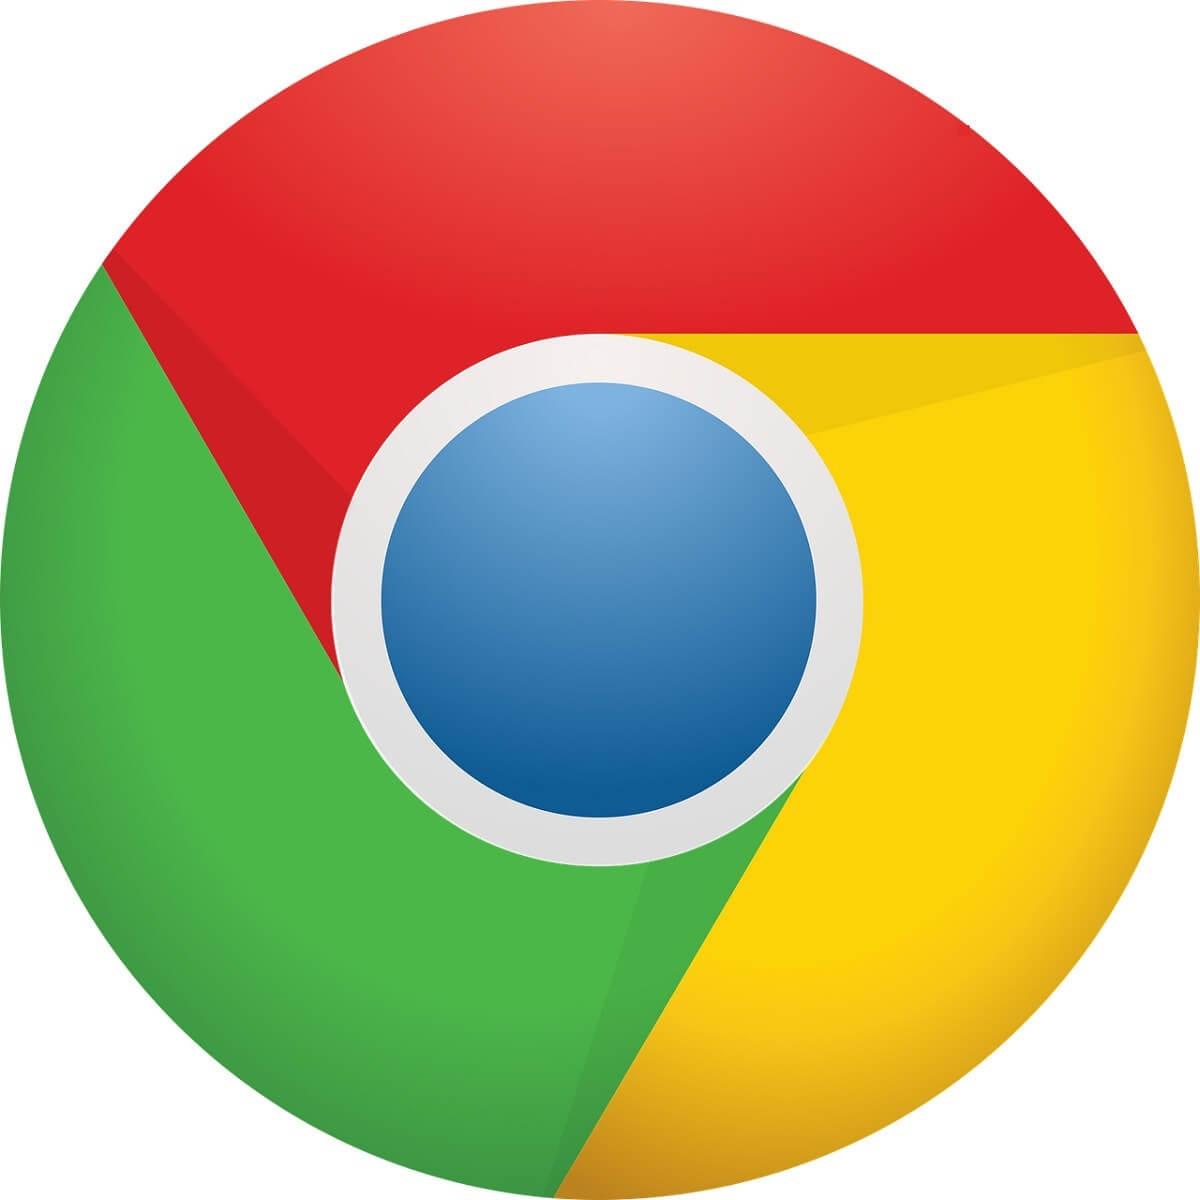 Corrección de errores - Error de red de Google Chrome en 3 sencillos pasos